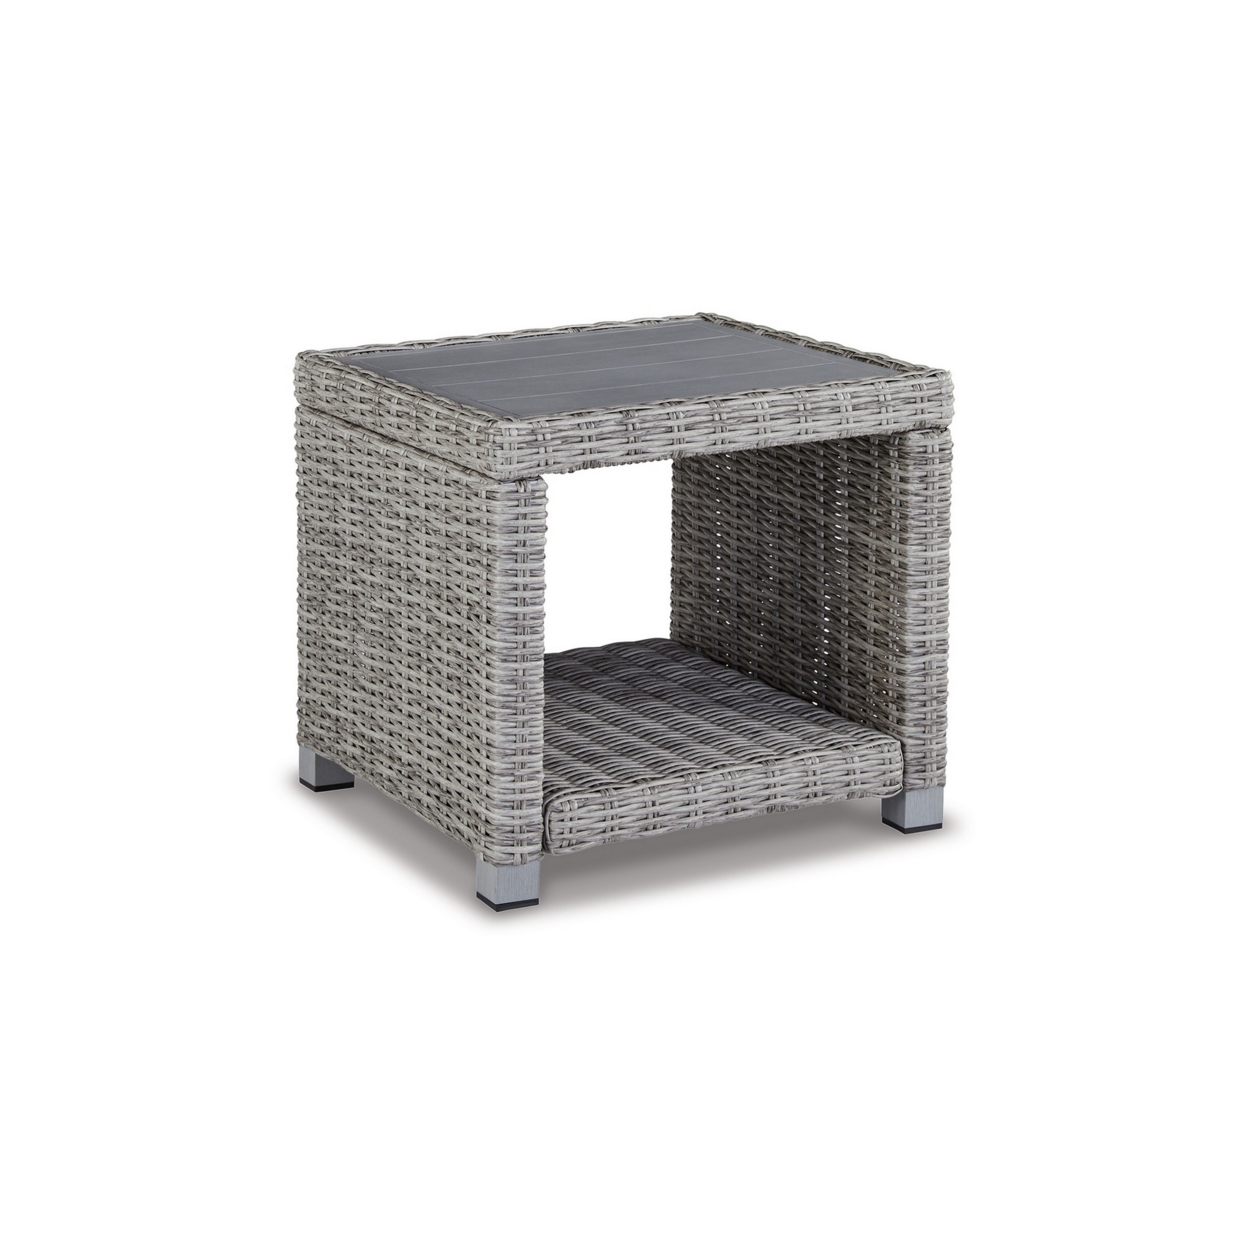 22 Inch Square Side End Table, Gray Resin Wicker Woven, Aluminum Frame- Saltoro Sherpi